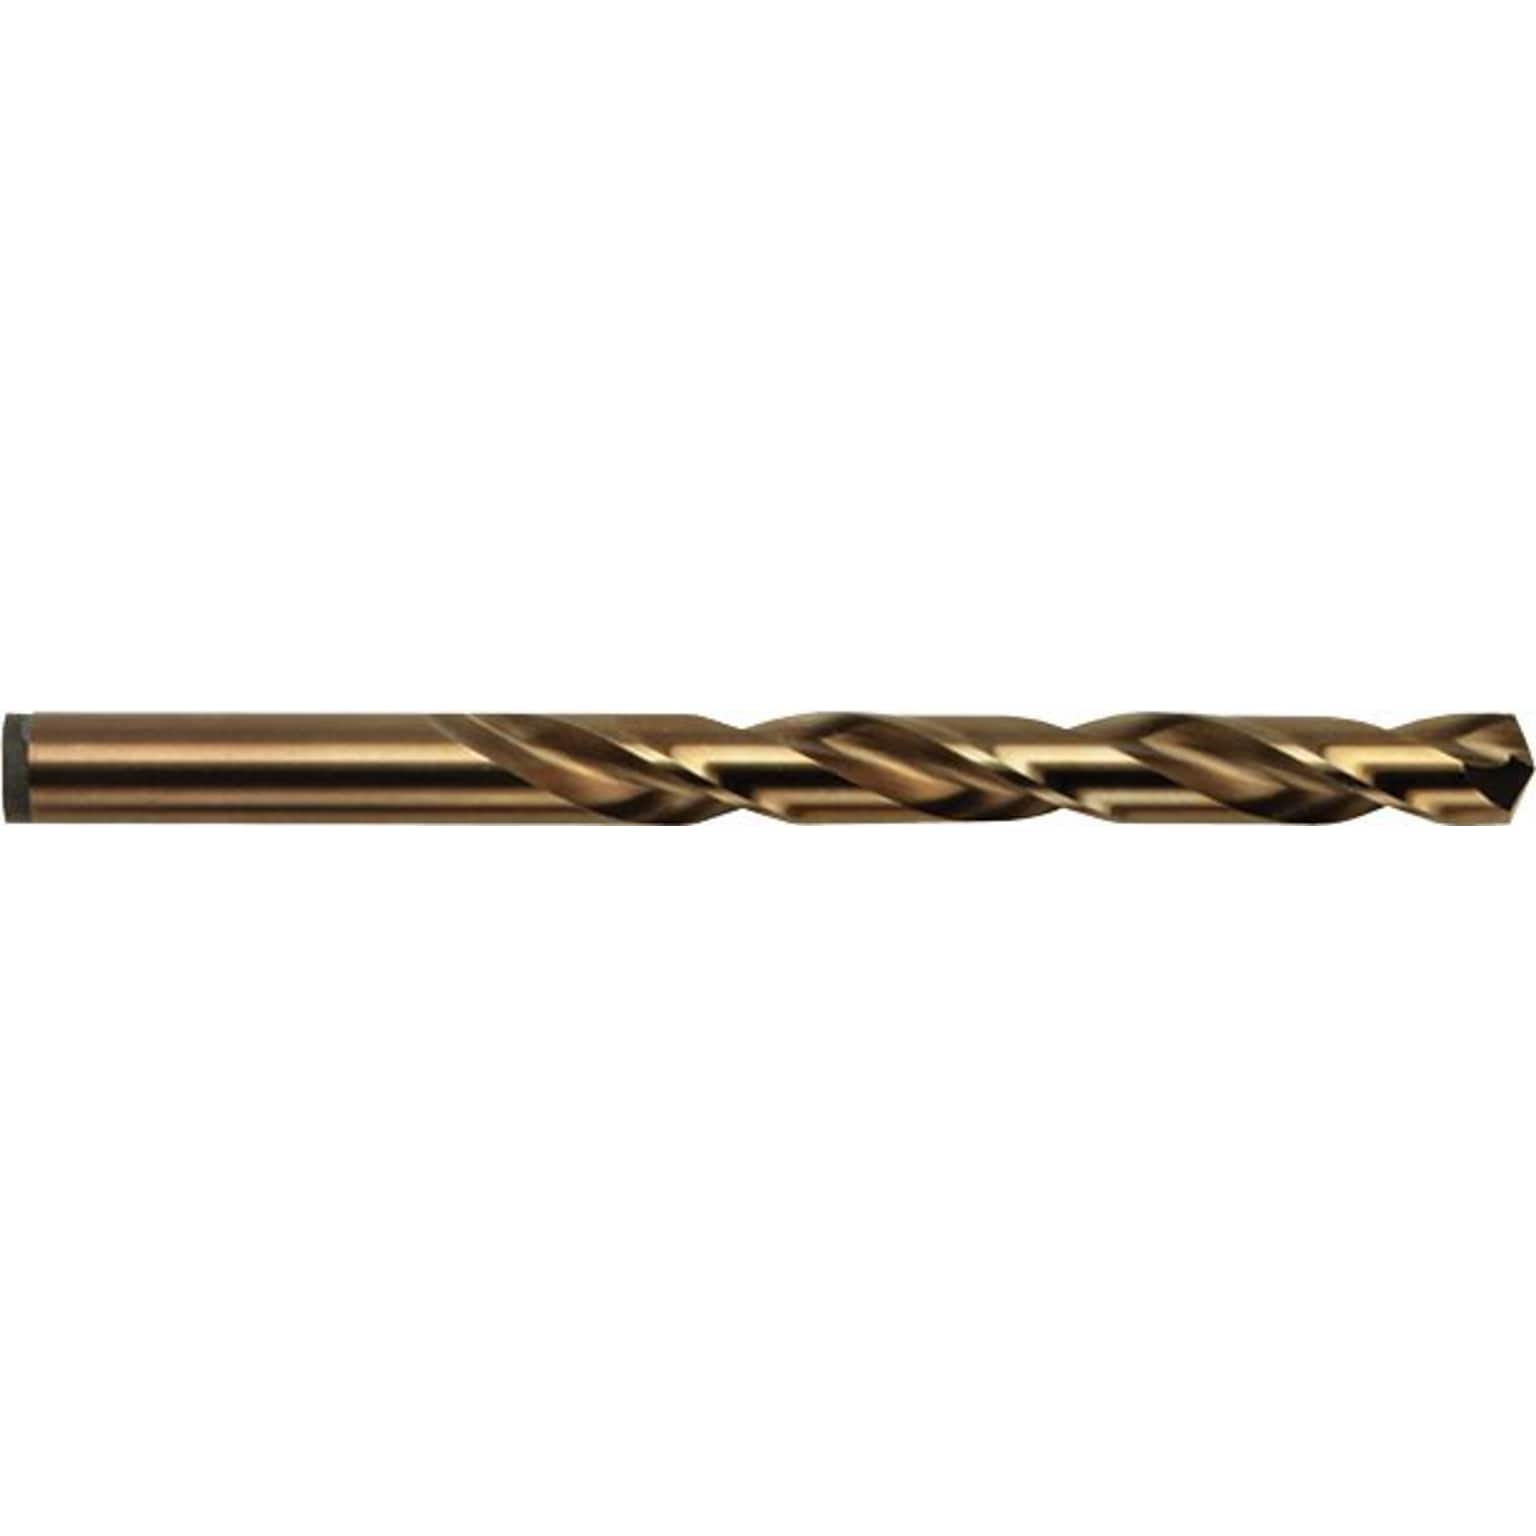 Irwin® Cobalt High Speed Steel Drill Bits, 1/2